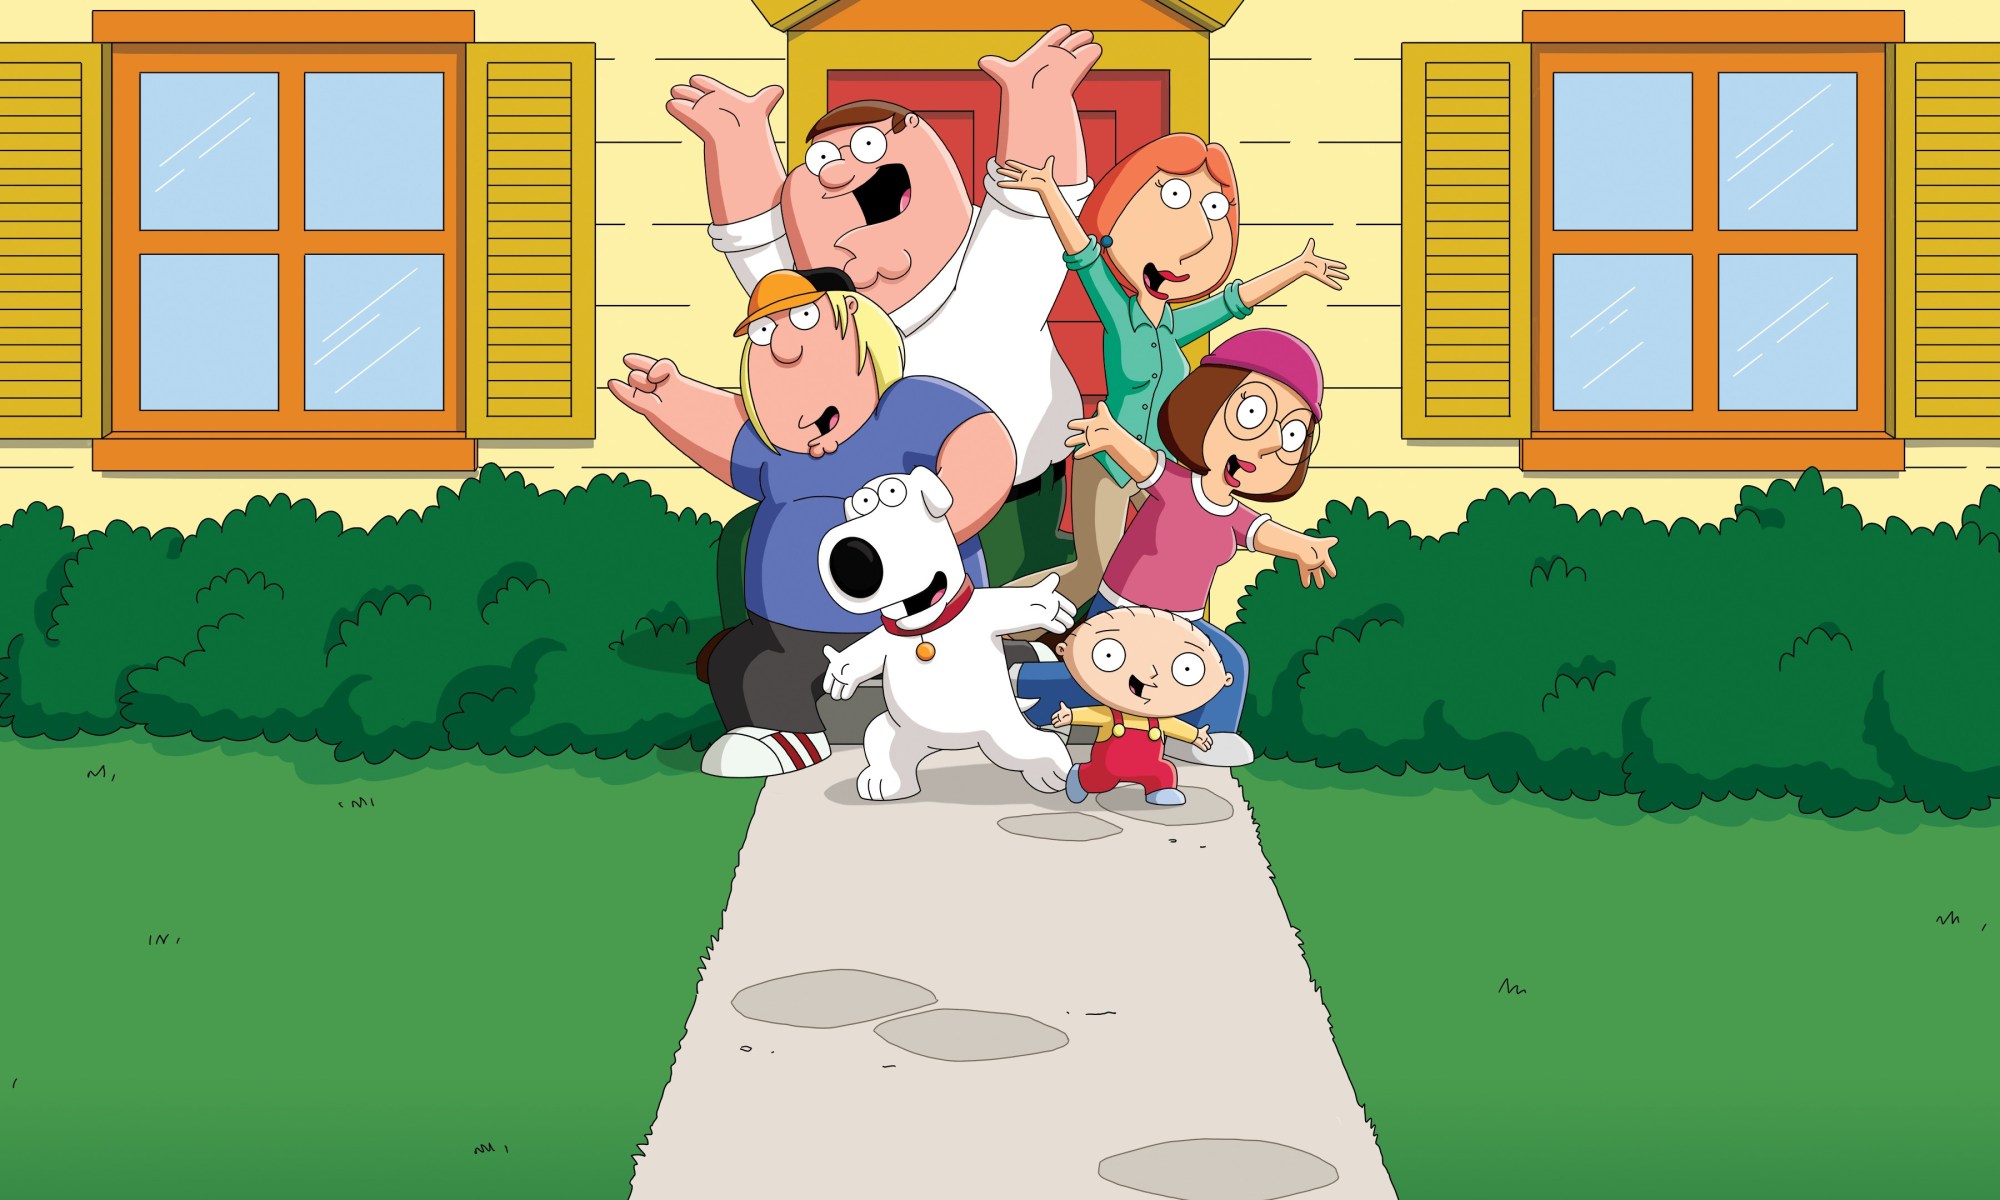 Family Guy Season 20